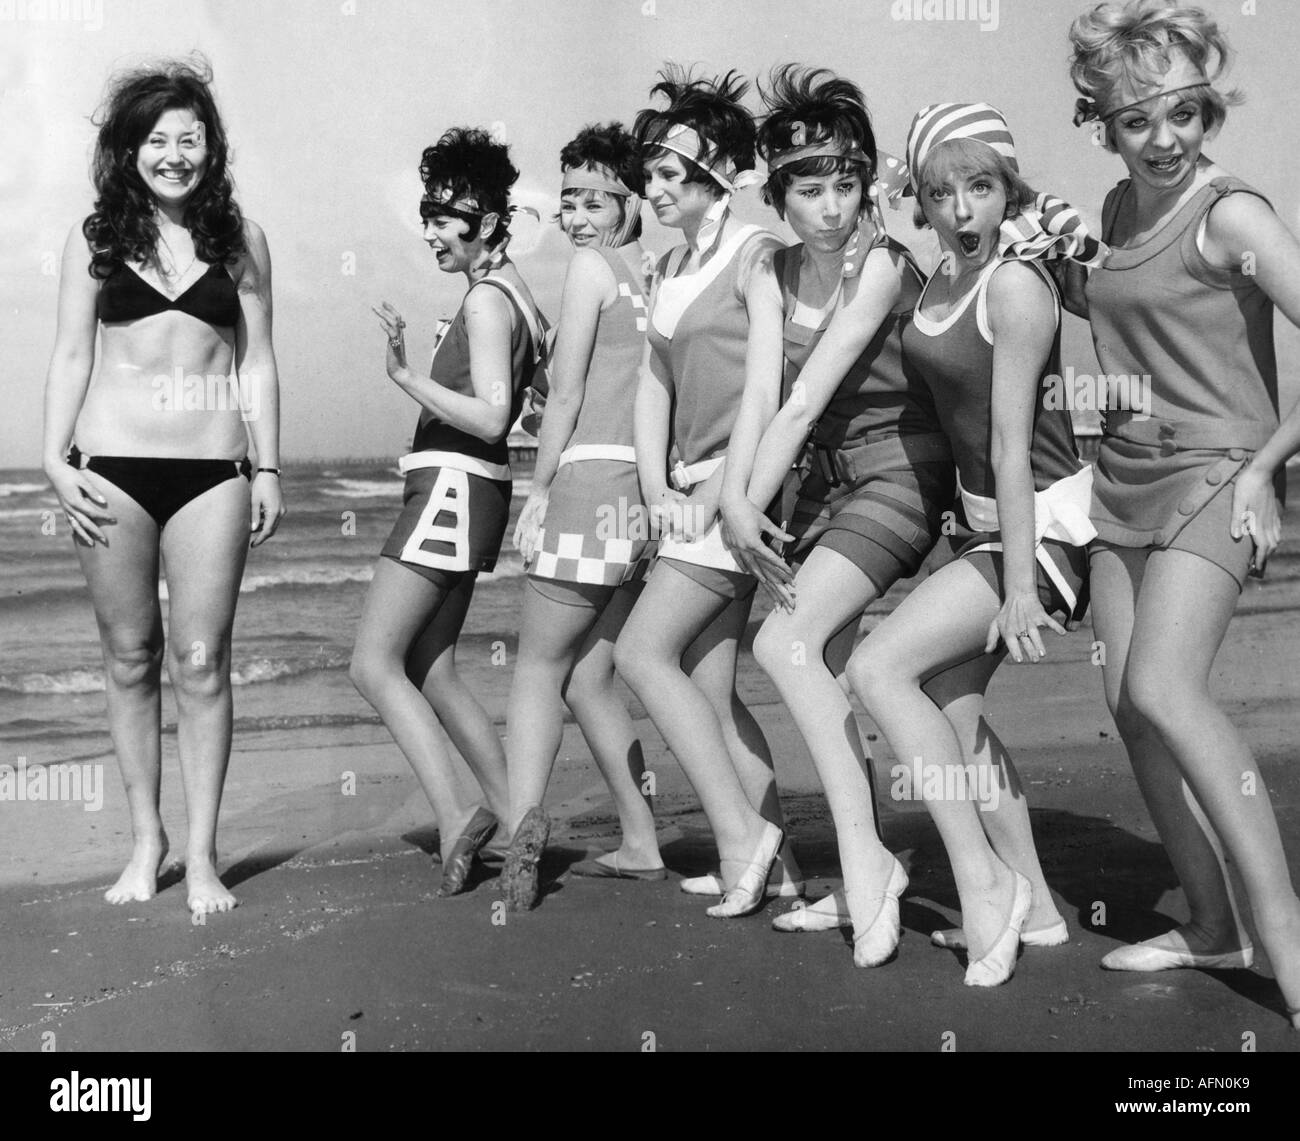 https://c8.alamy.com/comp/AFN0K9/fashion-women-in-beachwear-1960s-60s-AFN0K9.jpg